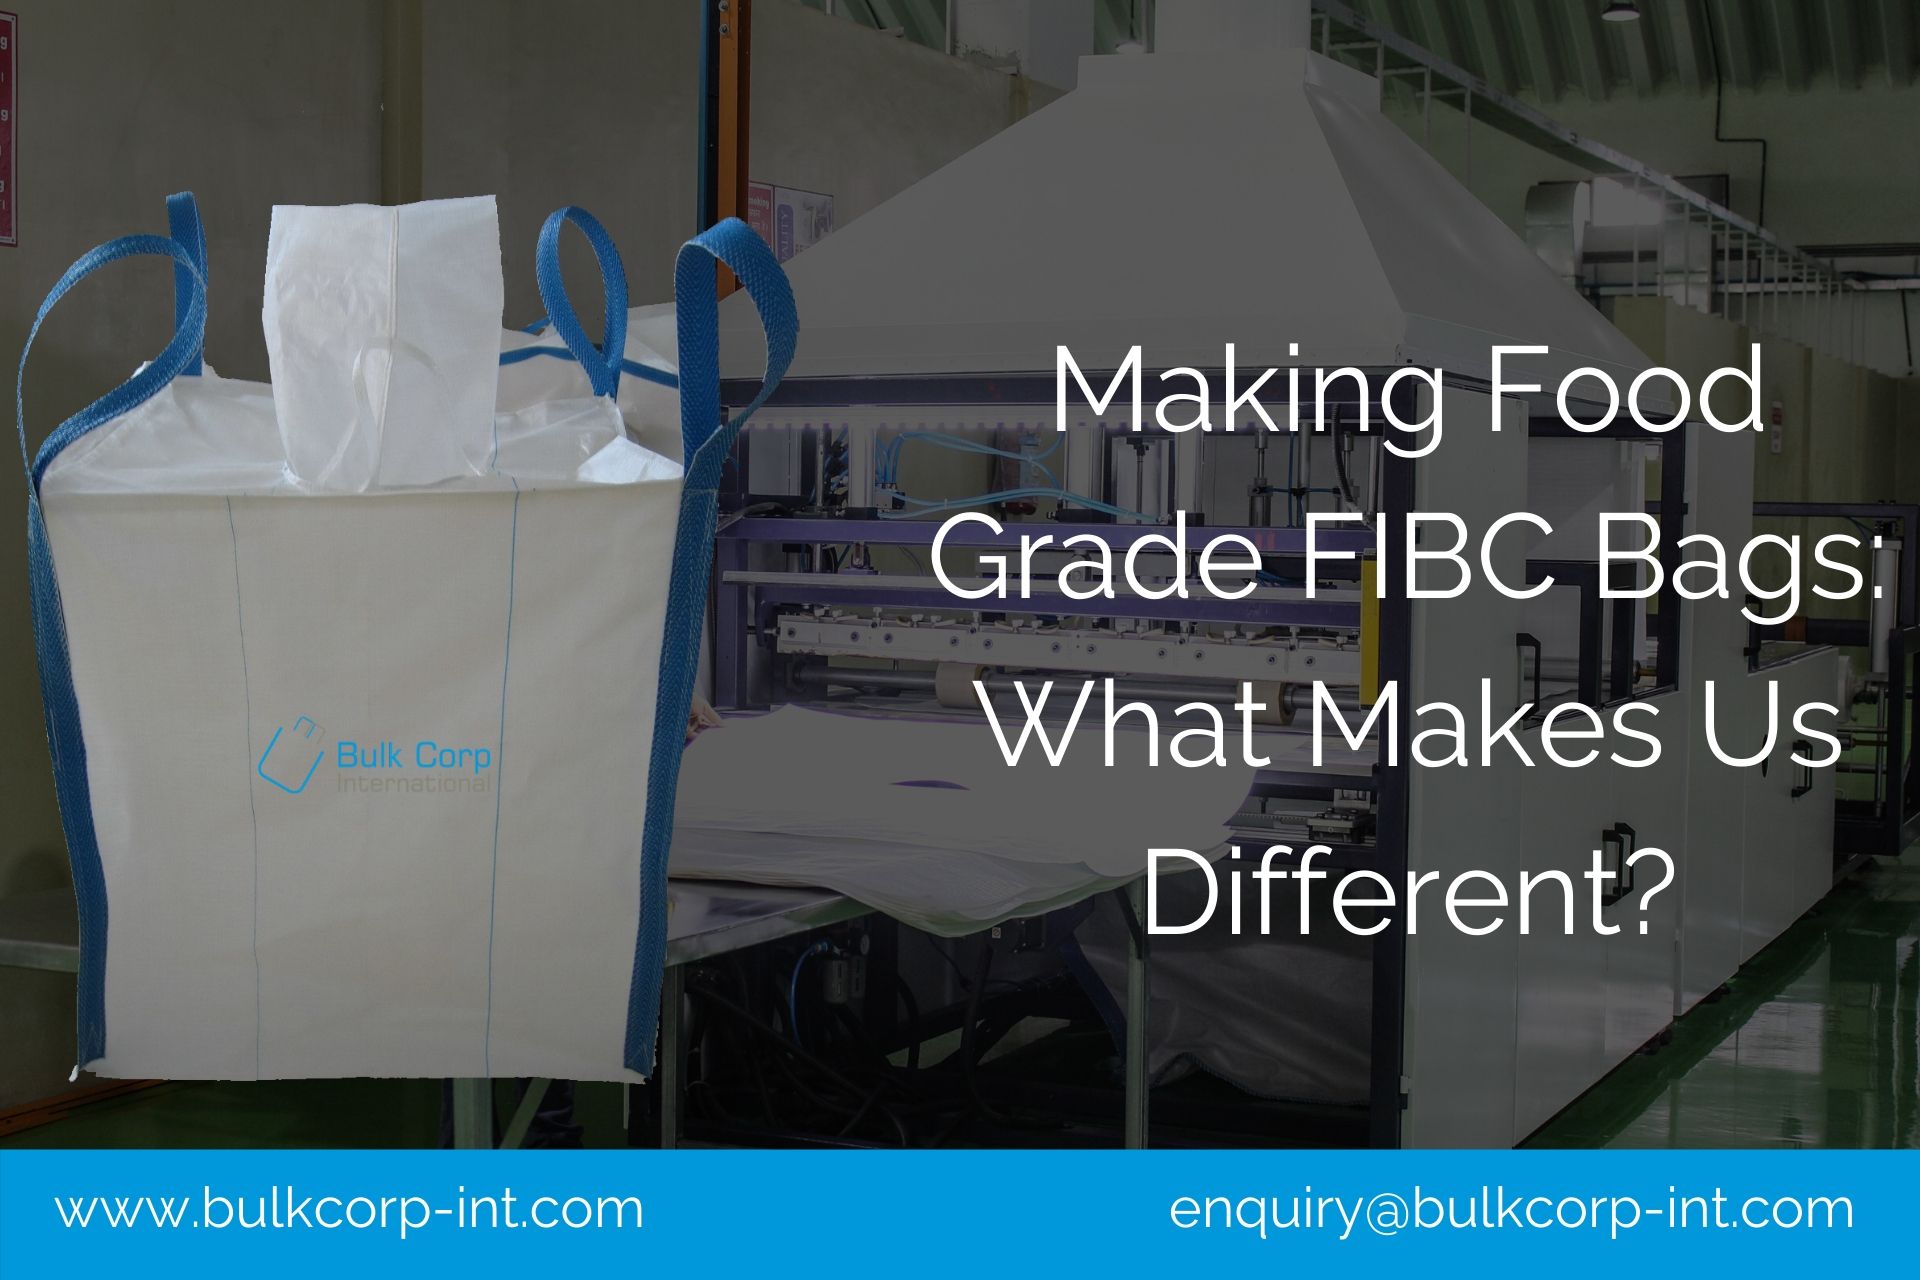 https://www.bulkcorp-int.com/blog/wp-content/uploads/2019/12/Making-Food-Grade-FIBC-Bags_-What-Makes-Us-Different.jpg